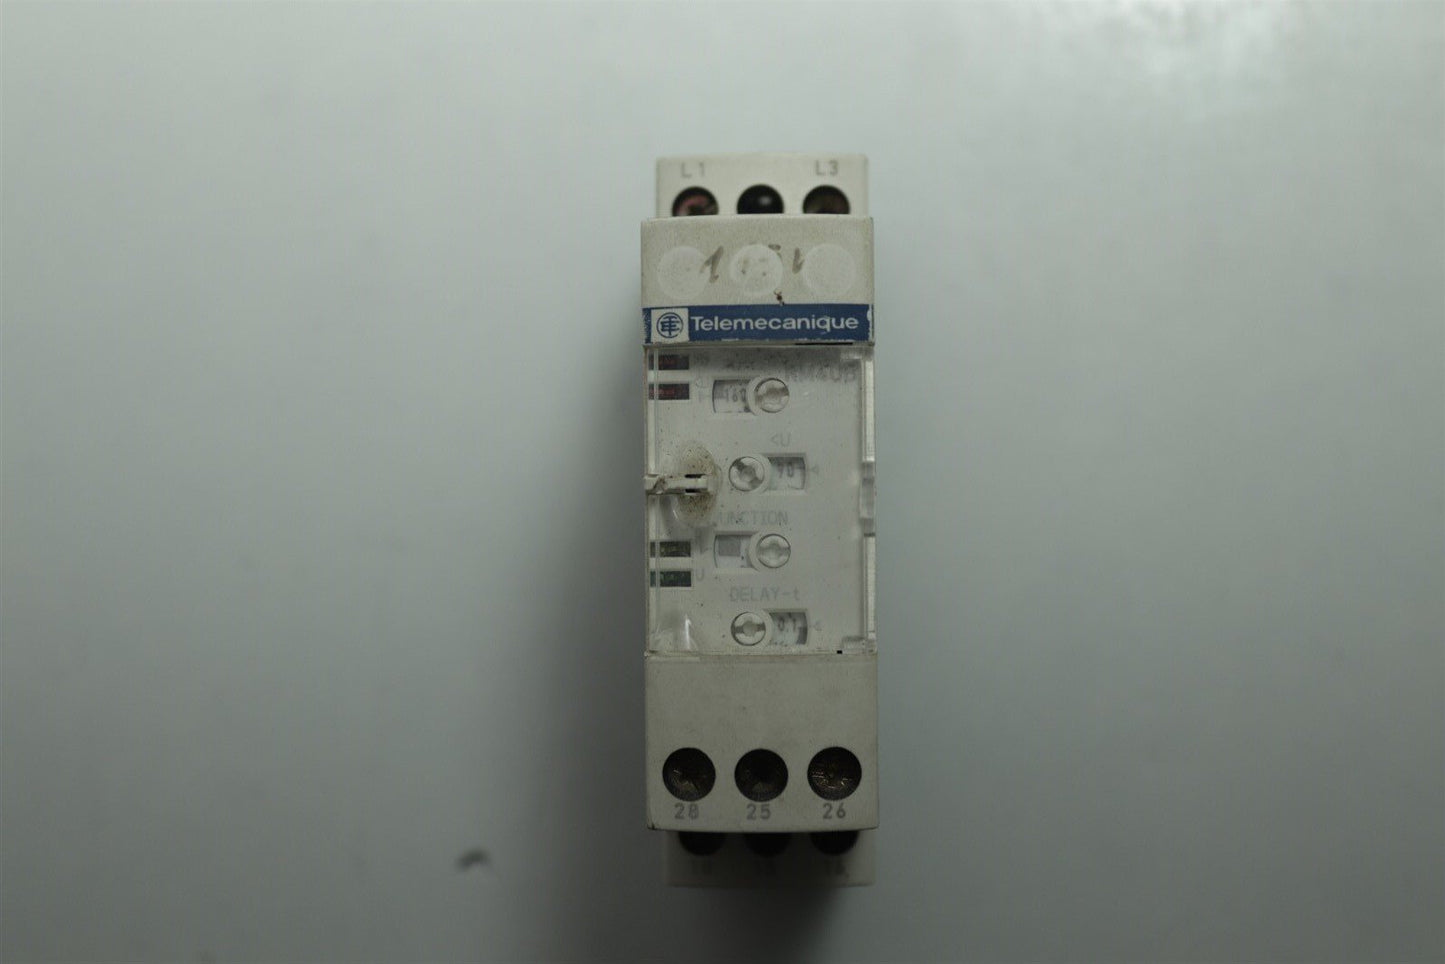 Telemecanique Single-Phase Control Relay RM4UB34